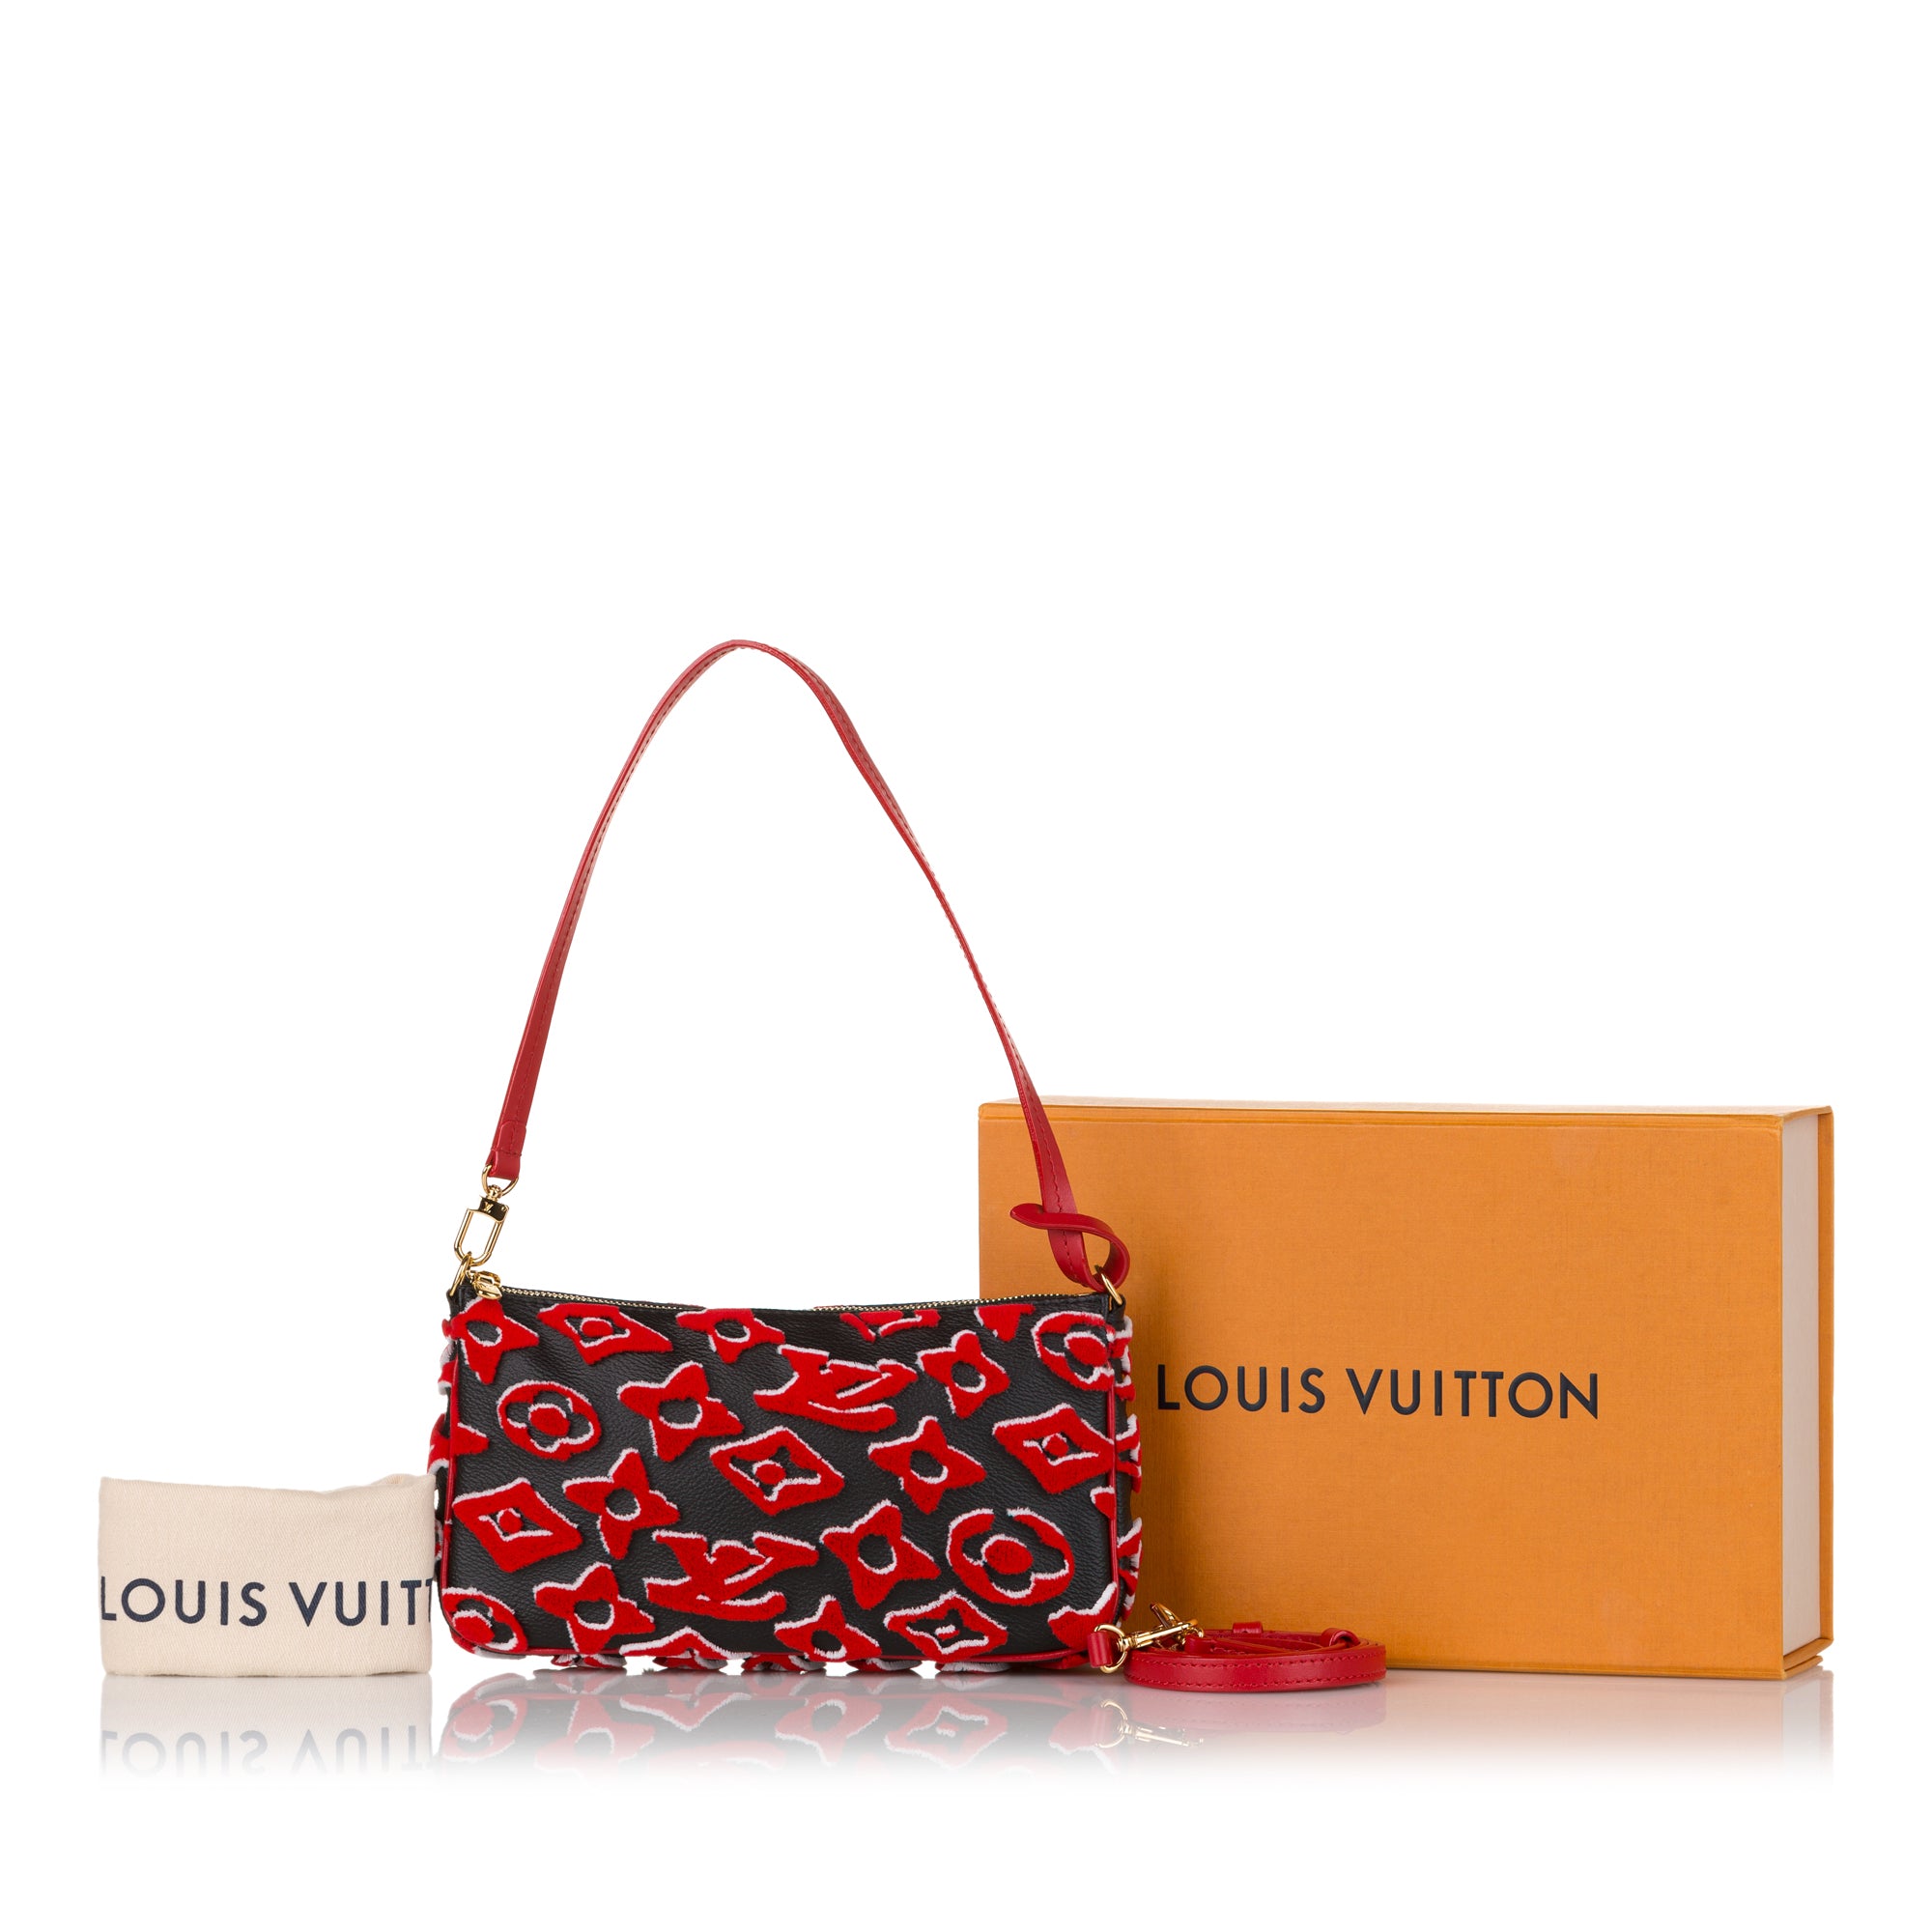 Louis Vuitton X Urs Fischer Collection Case